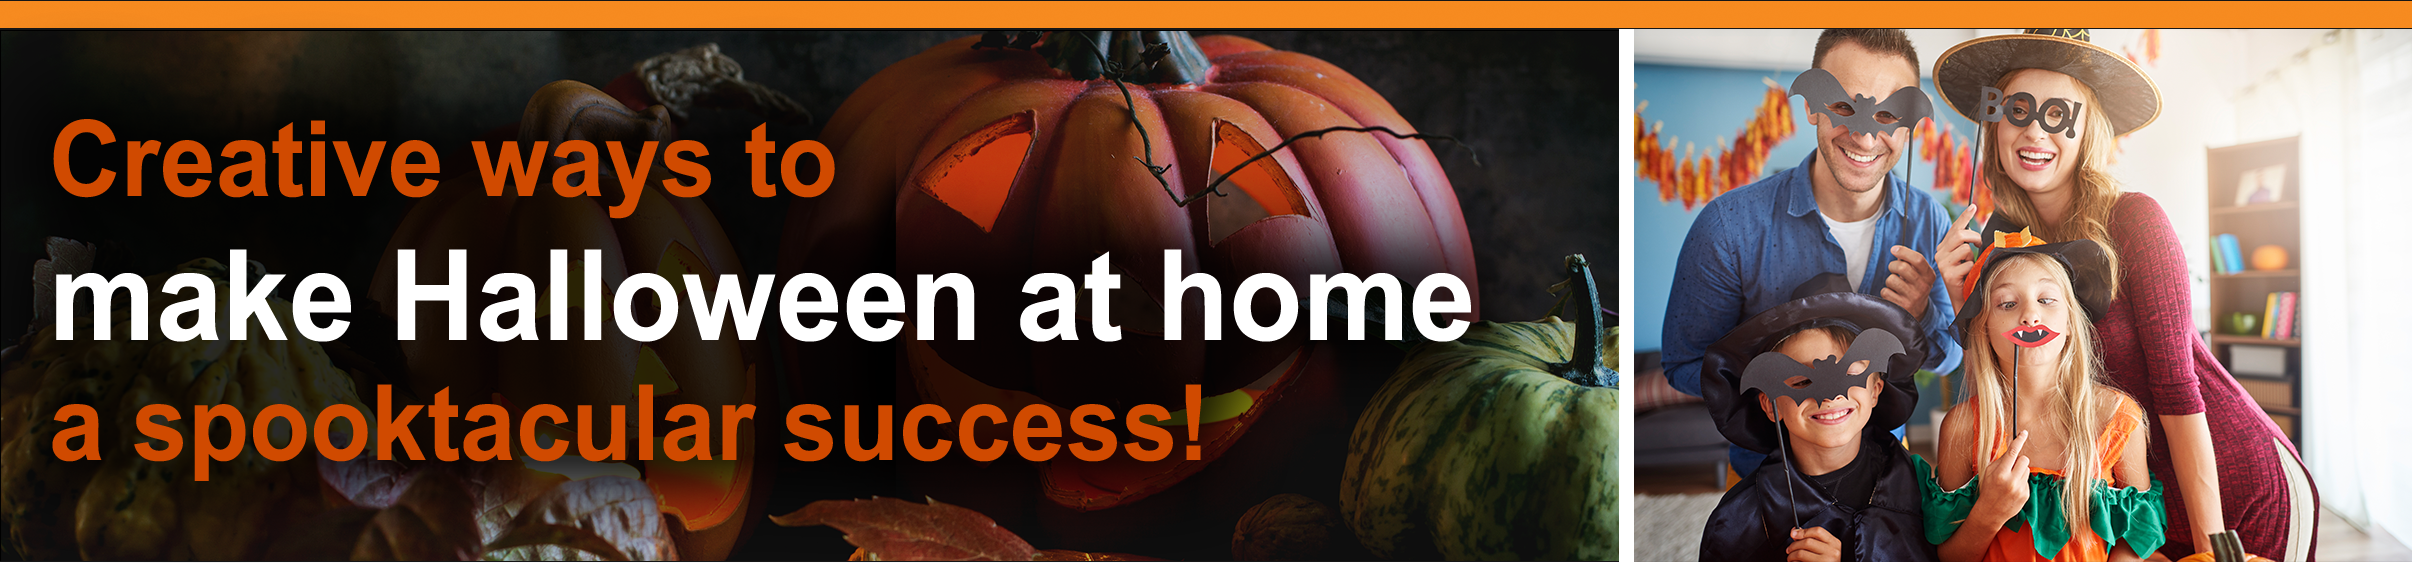 Creative ways to make Halloween at home a spooktacular success.